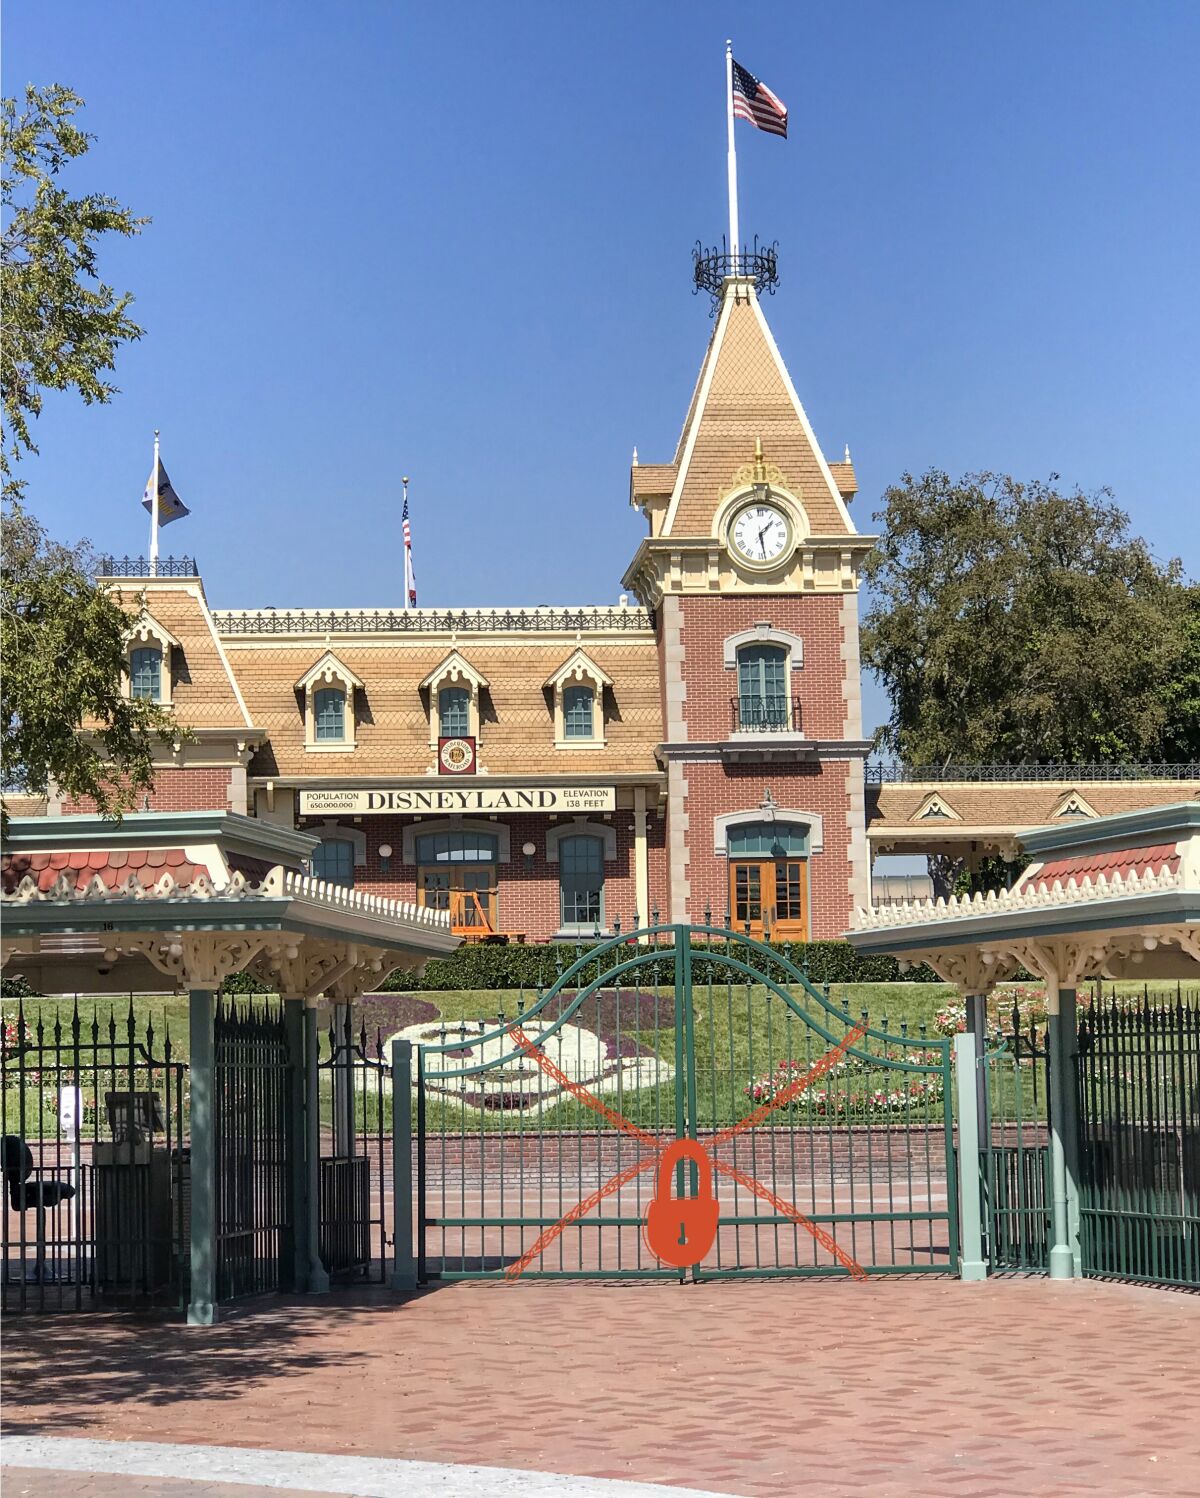 Disneyland's gates are closed.